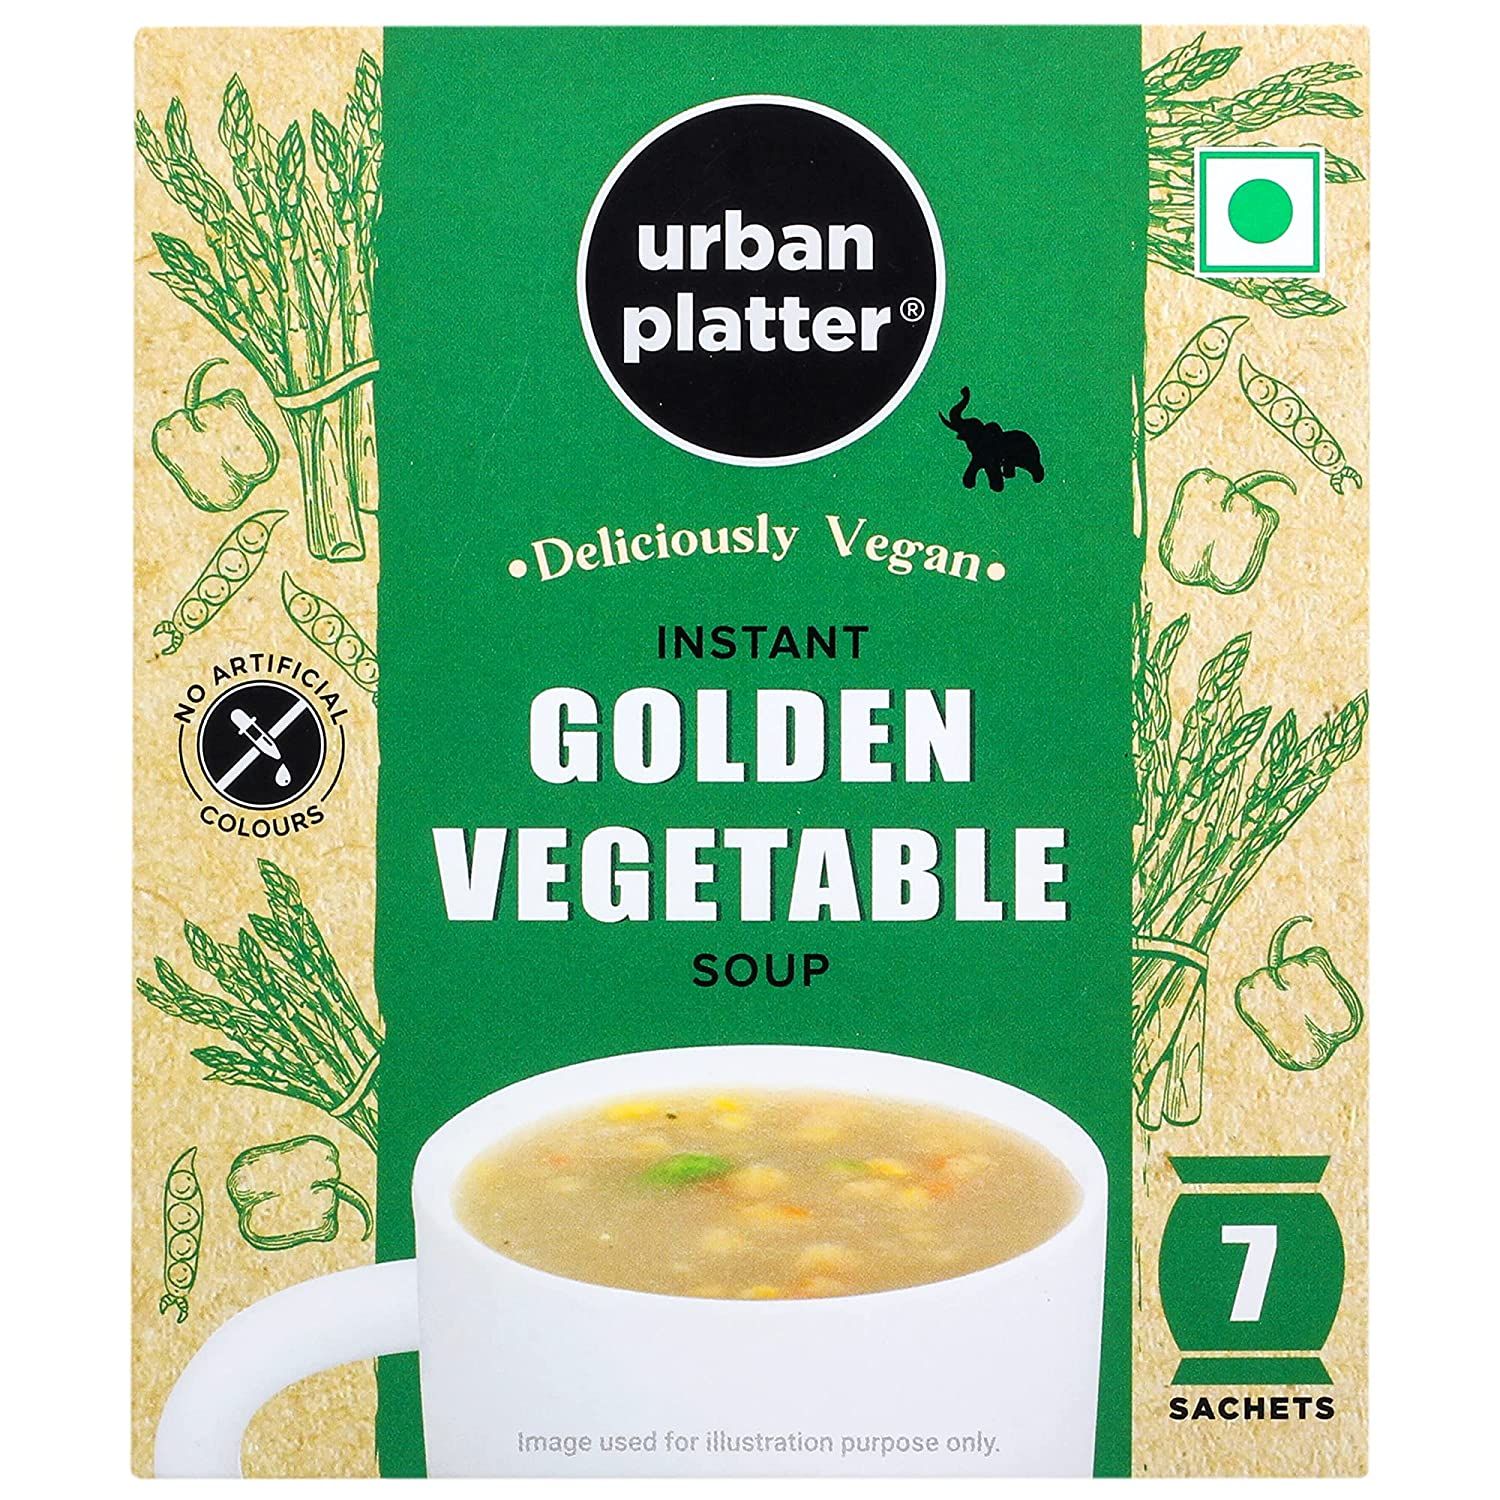 Urban Platter Vegan Instant Golden Vegetable Cup Soup Image